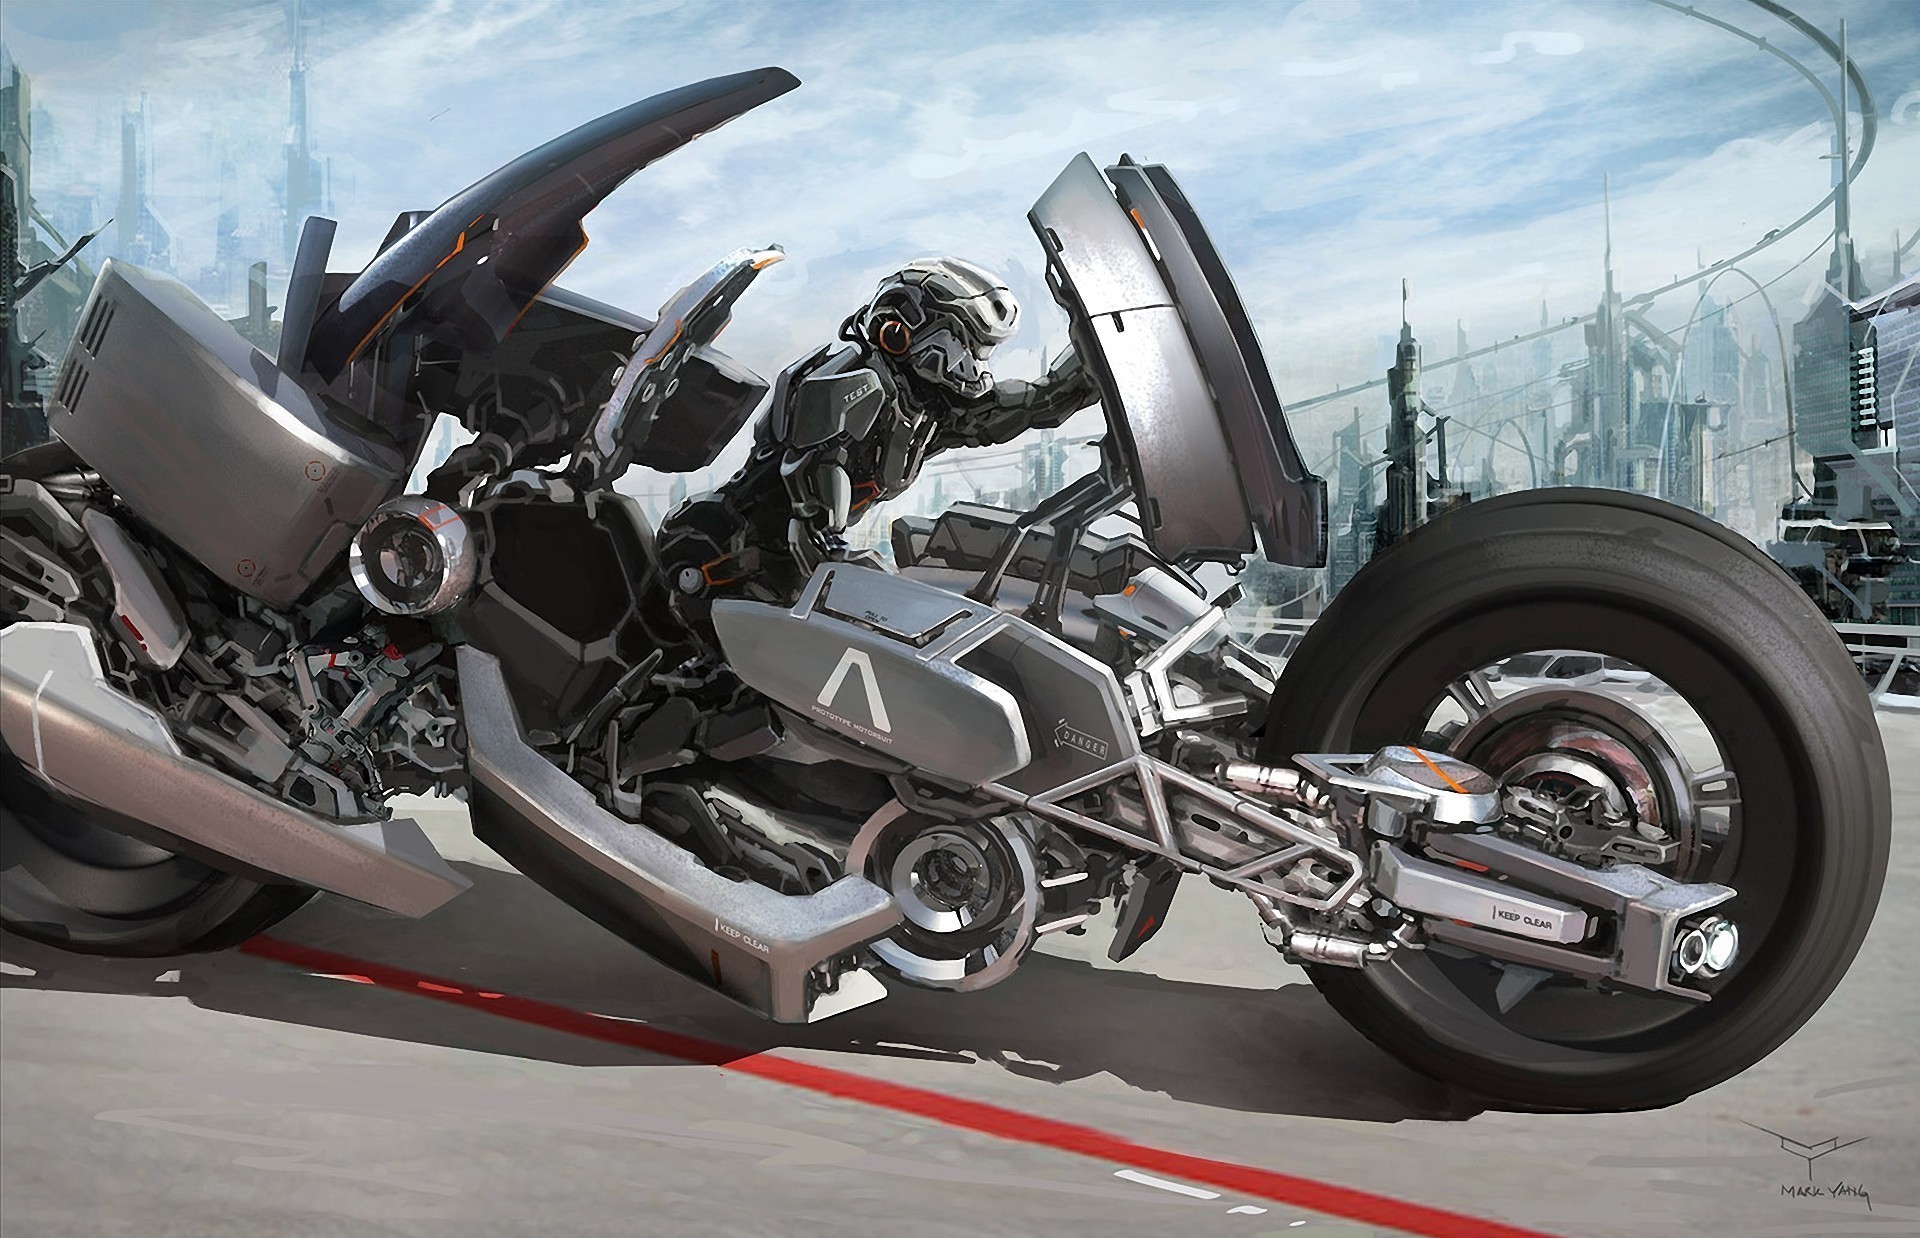 General 1920x1238 science fiction artwork cyborg futuristic motorcycle vehicle digital art watermarked